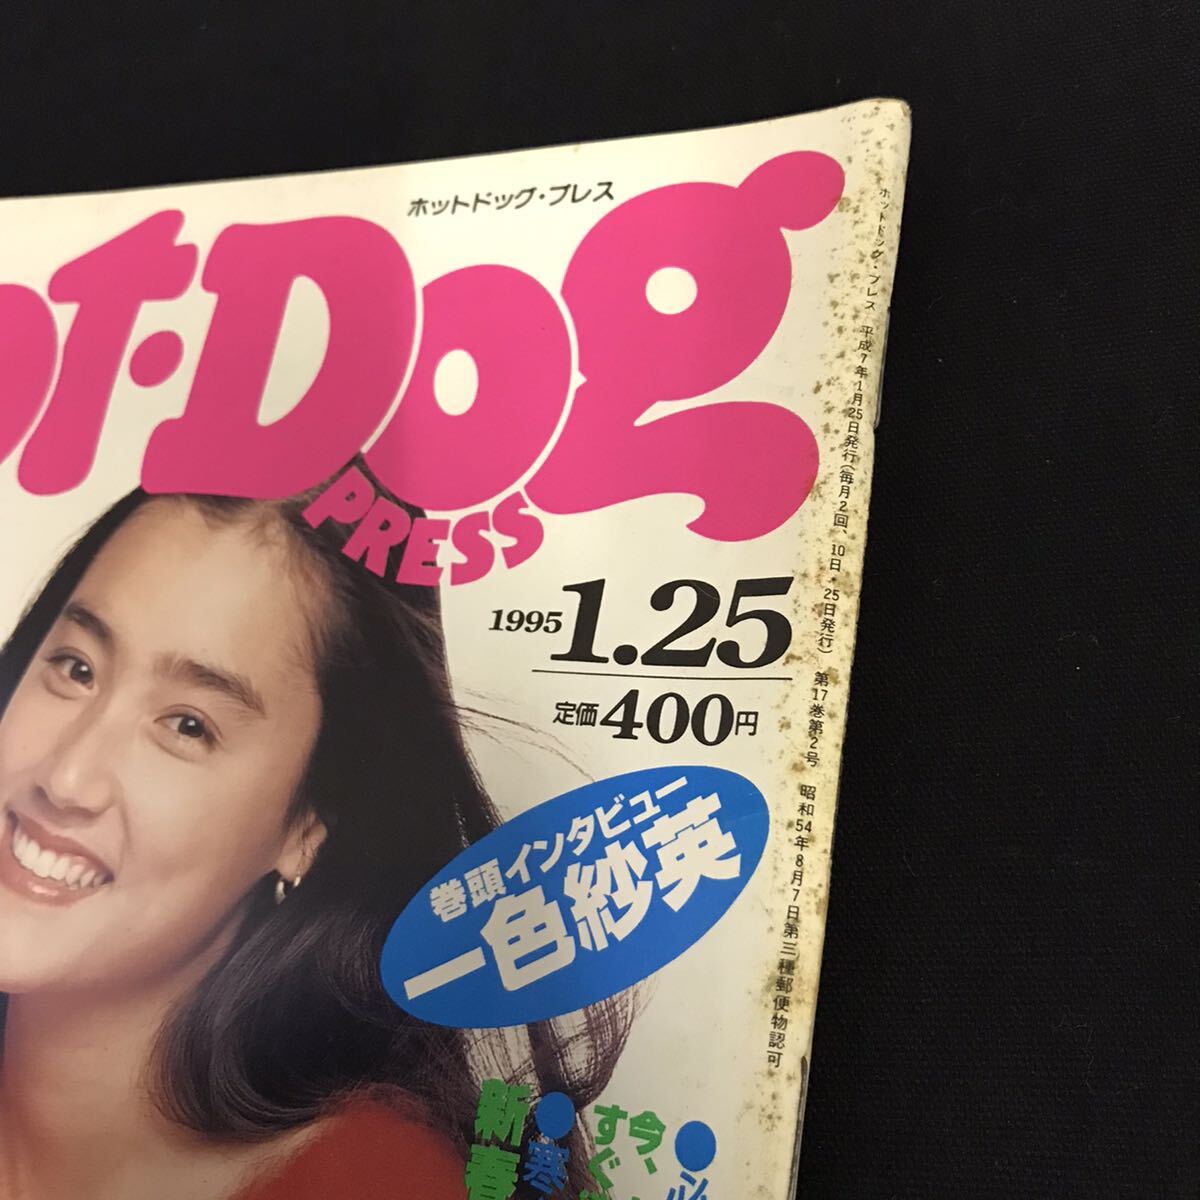 E1818 is #Hot Dog PRESS hot dog Press Heisei era 7 year 1 month 25 day issue No.352